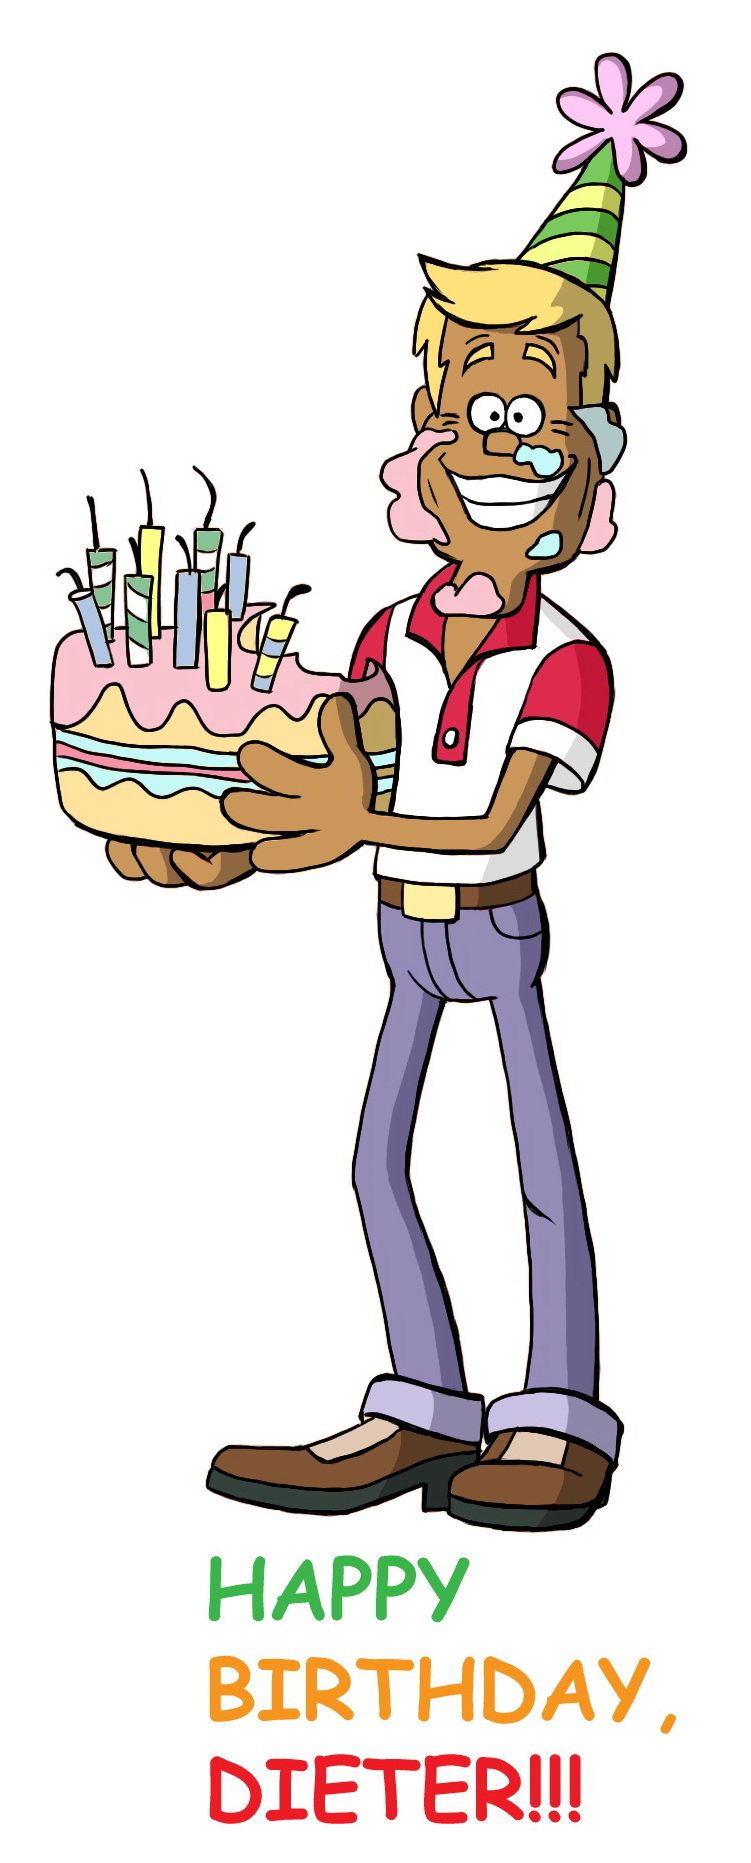 Happy Birthday, Dieter!!! by JollyInlove on DeviantArt